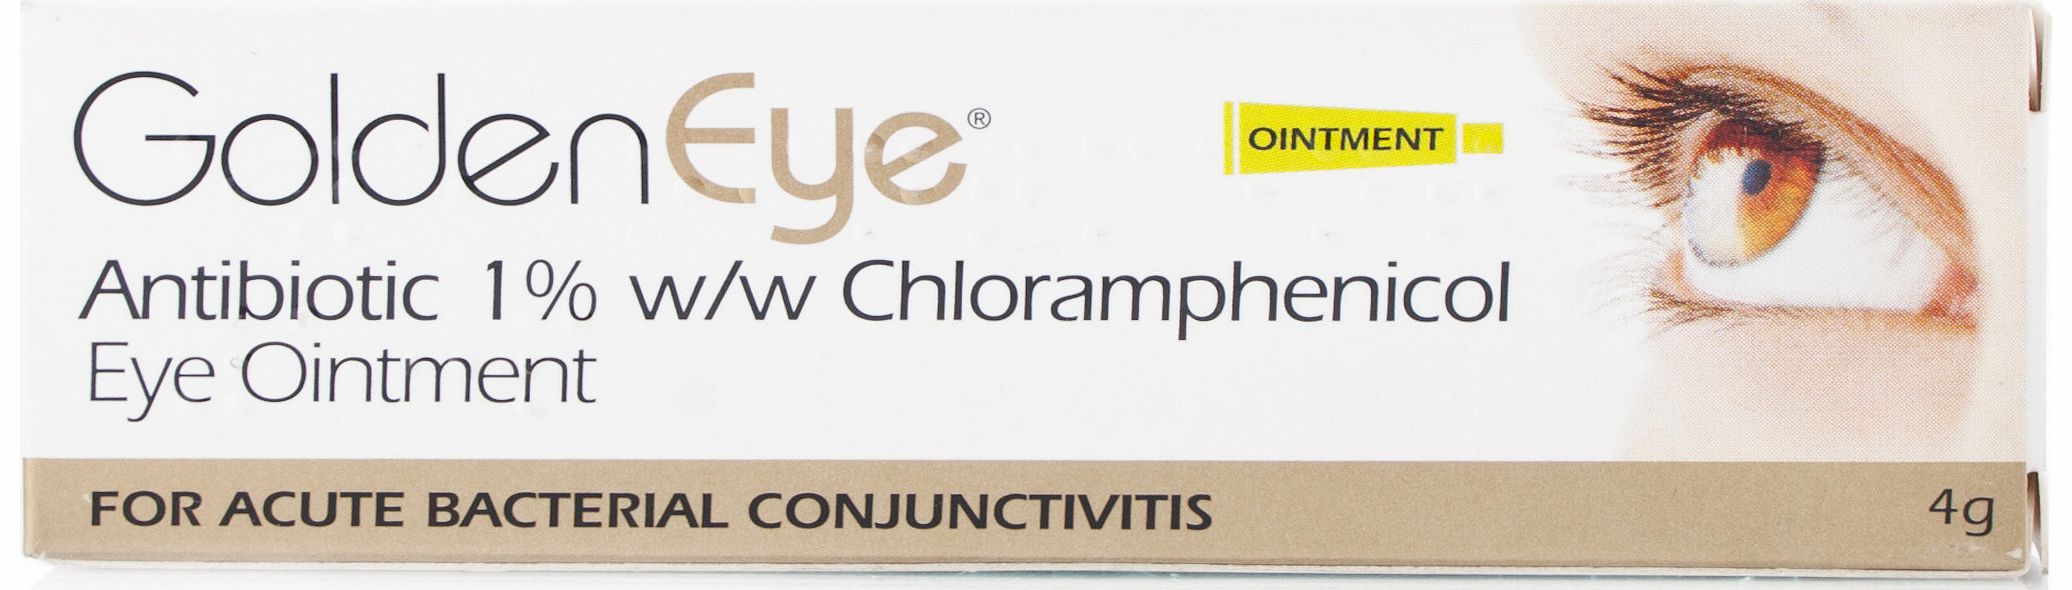 Chloramphenicol Eye Ointment